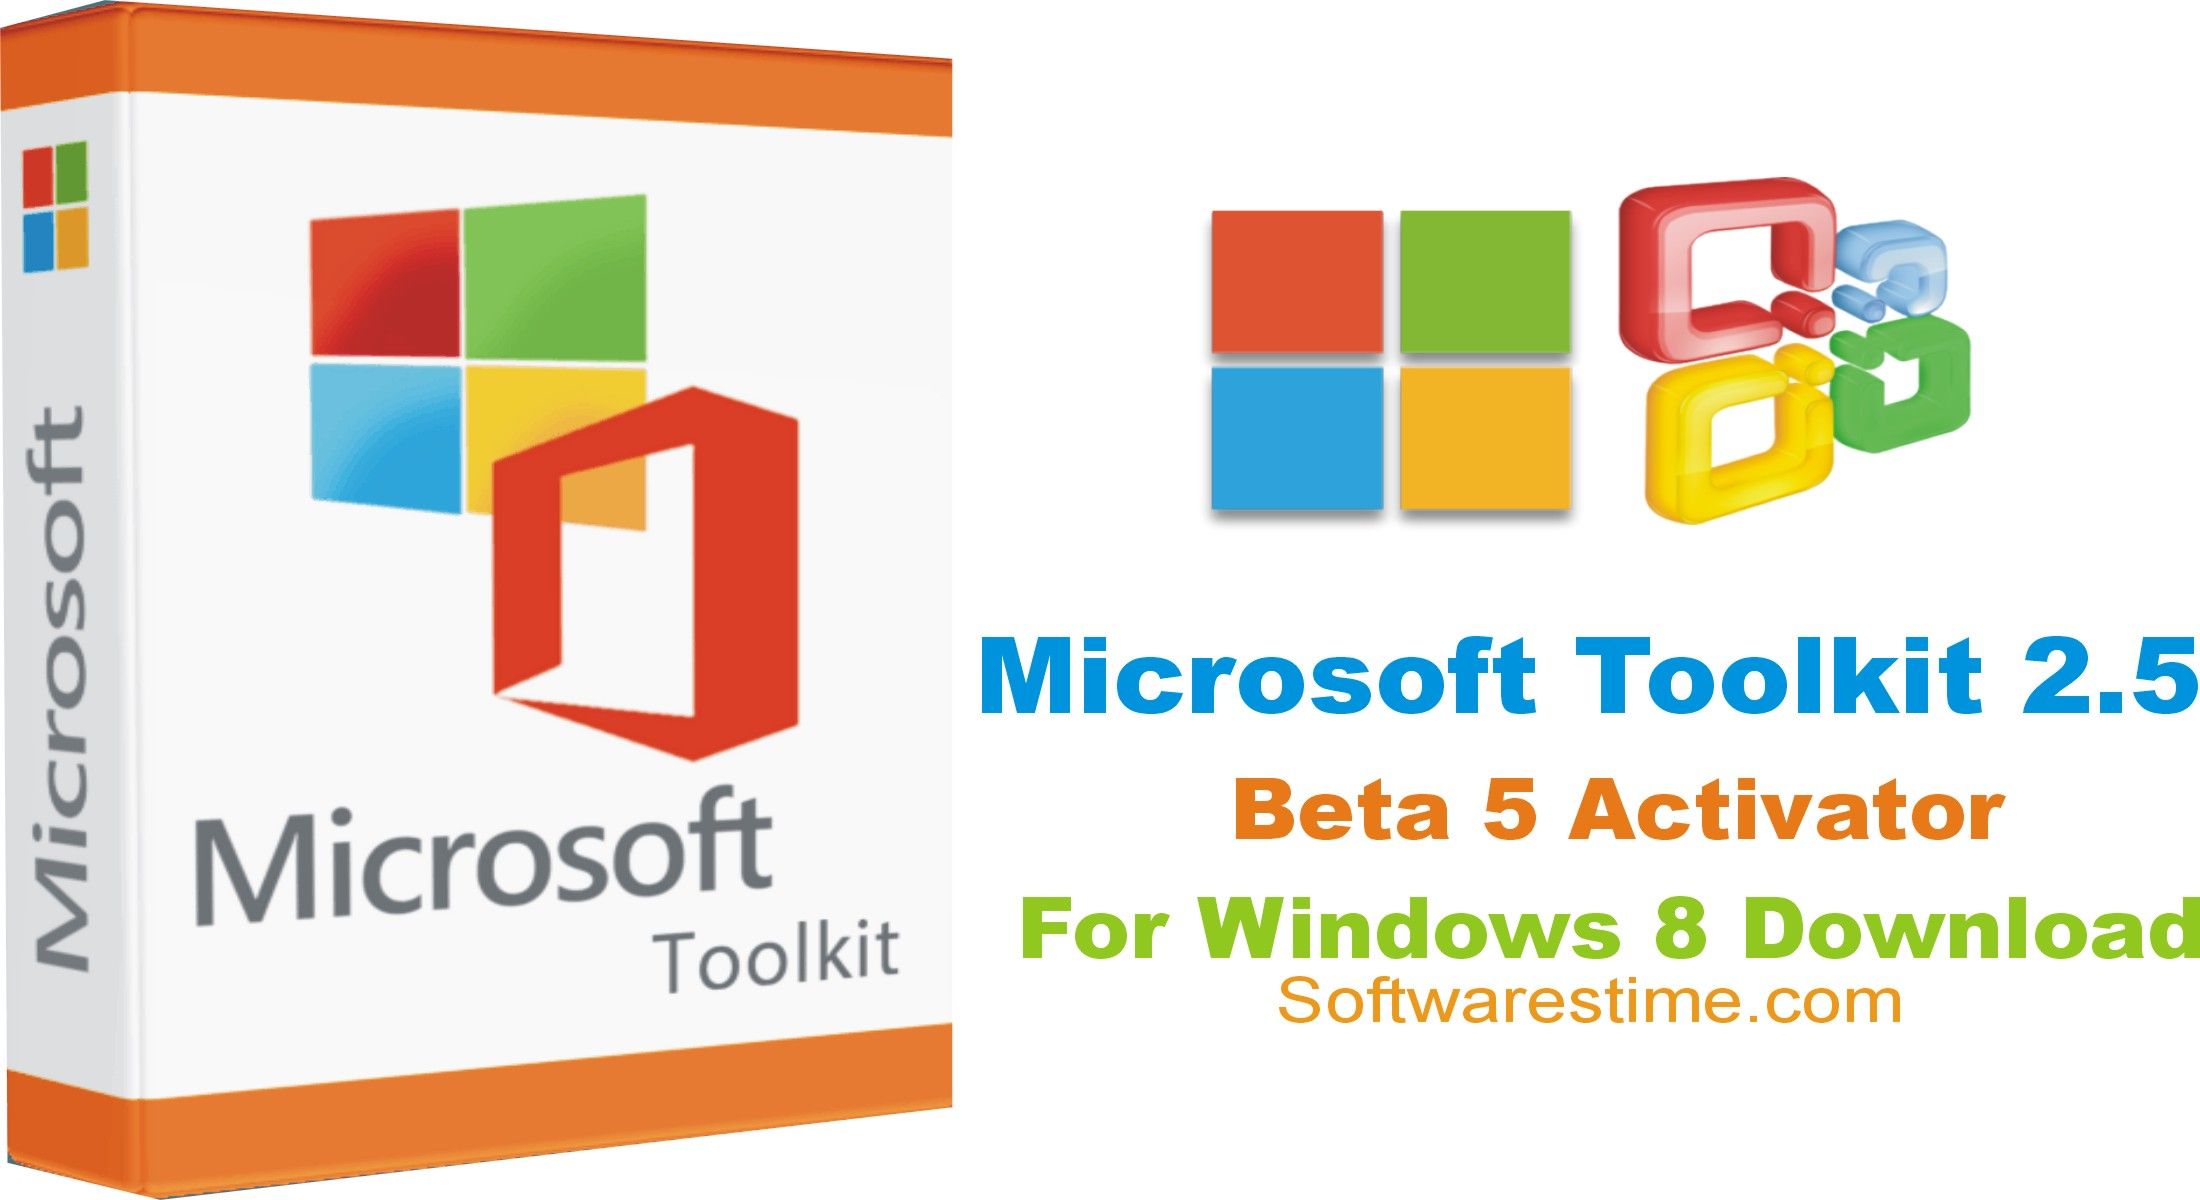 microsoft toolkit 2.6 beta 5 activator for windows 8.1 download